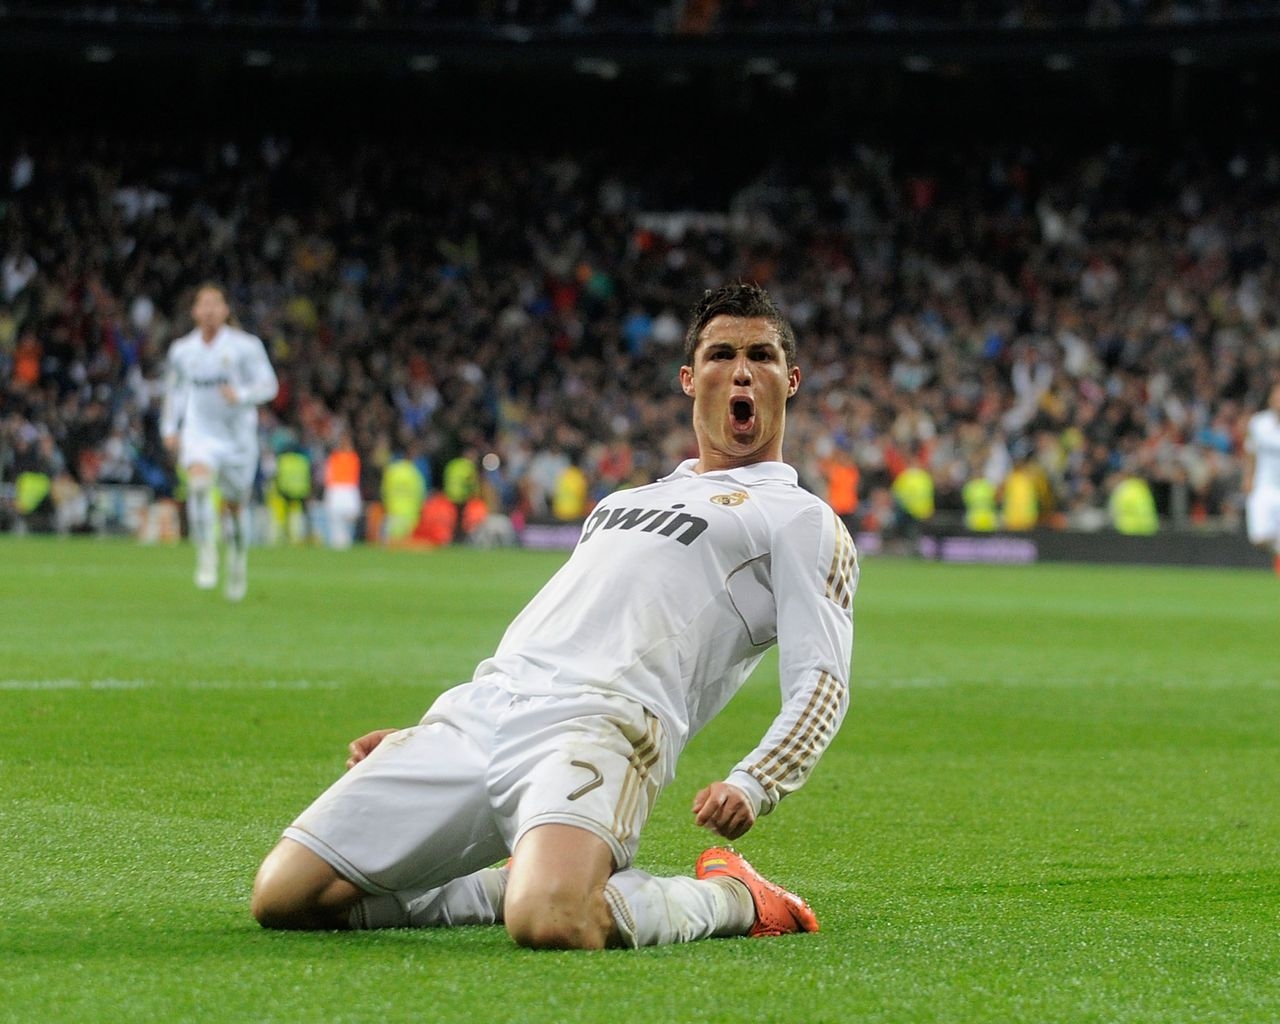 Cristiano Ronaldo Celebrating for 1280 x 1024 resolution